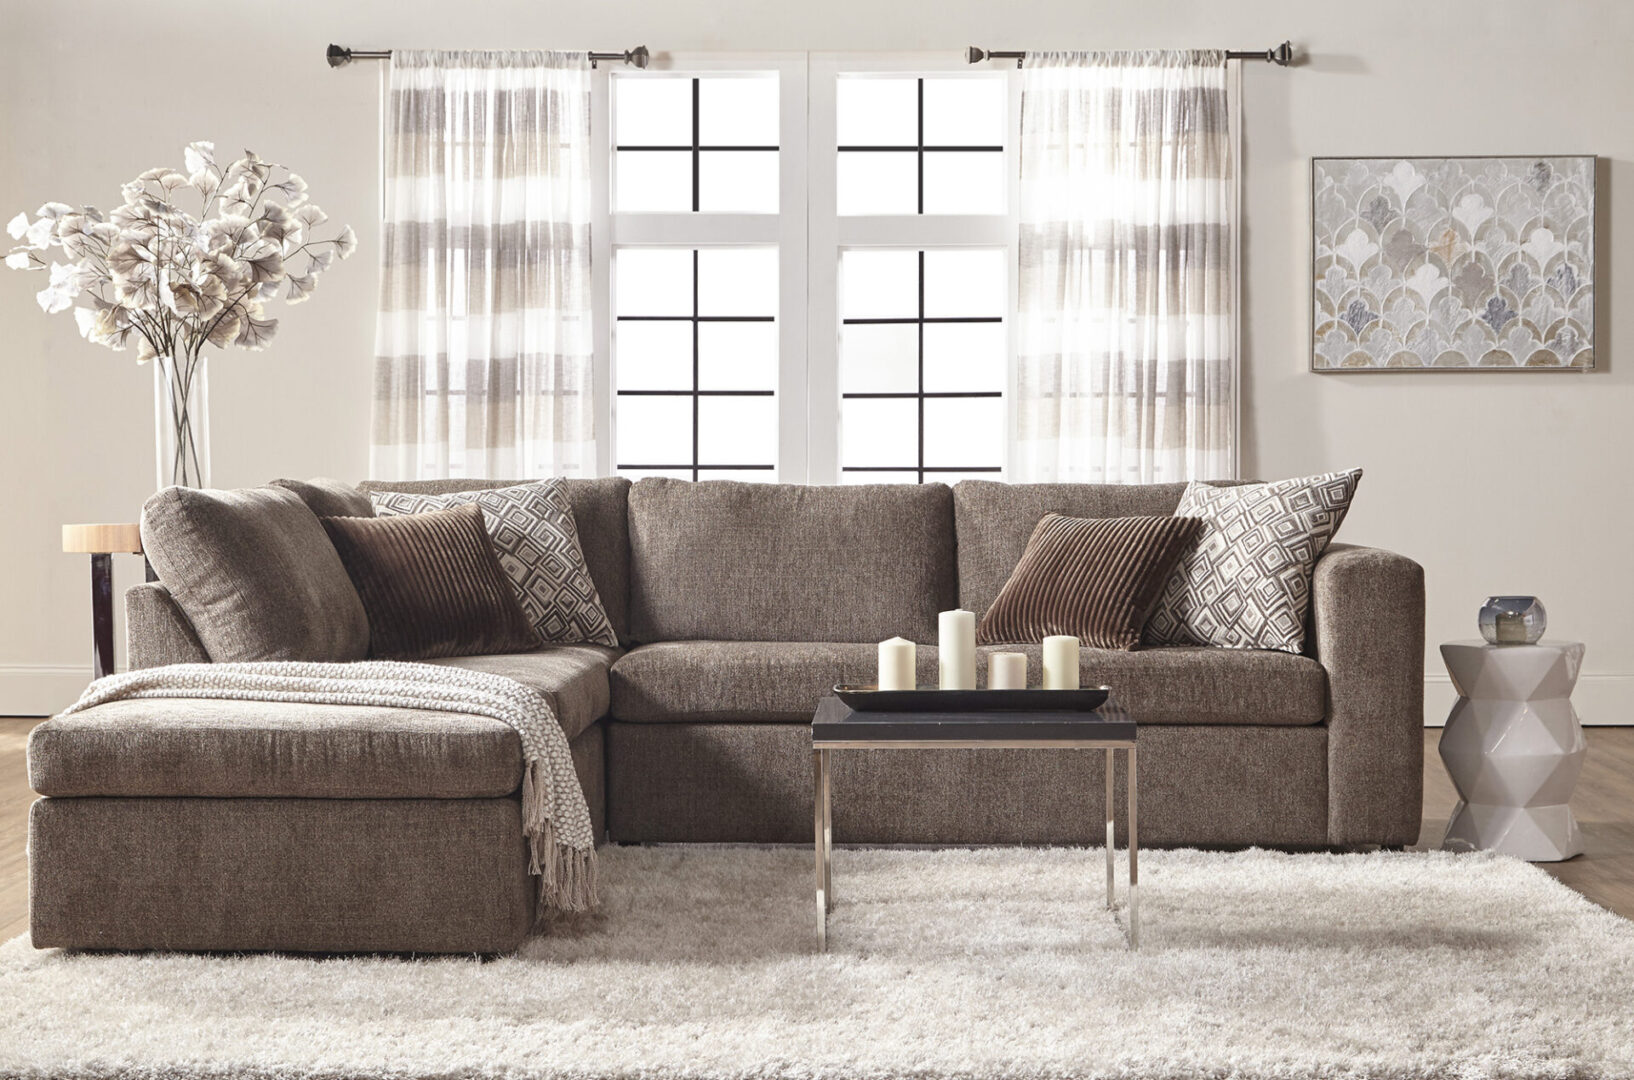 A beautiful sofa set with cushion pillows